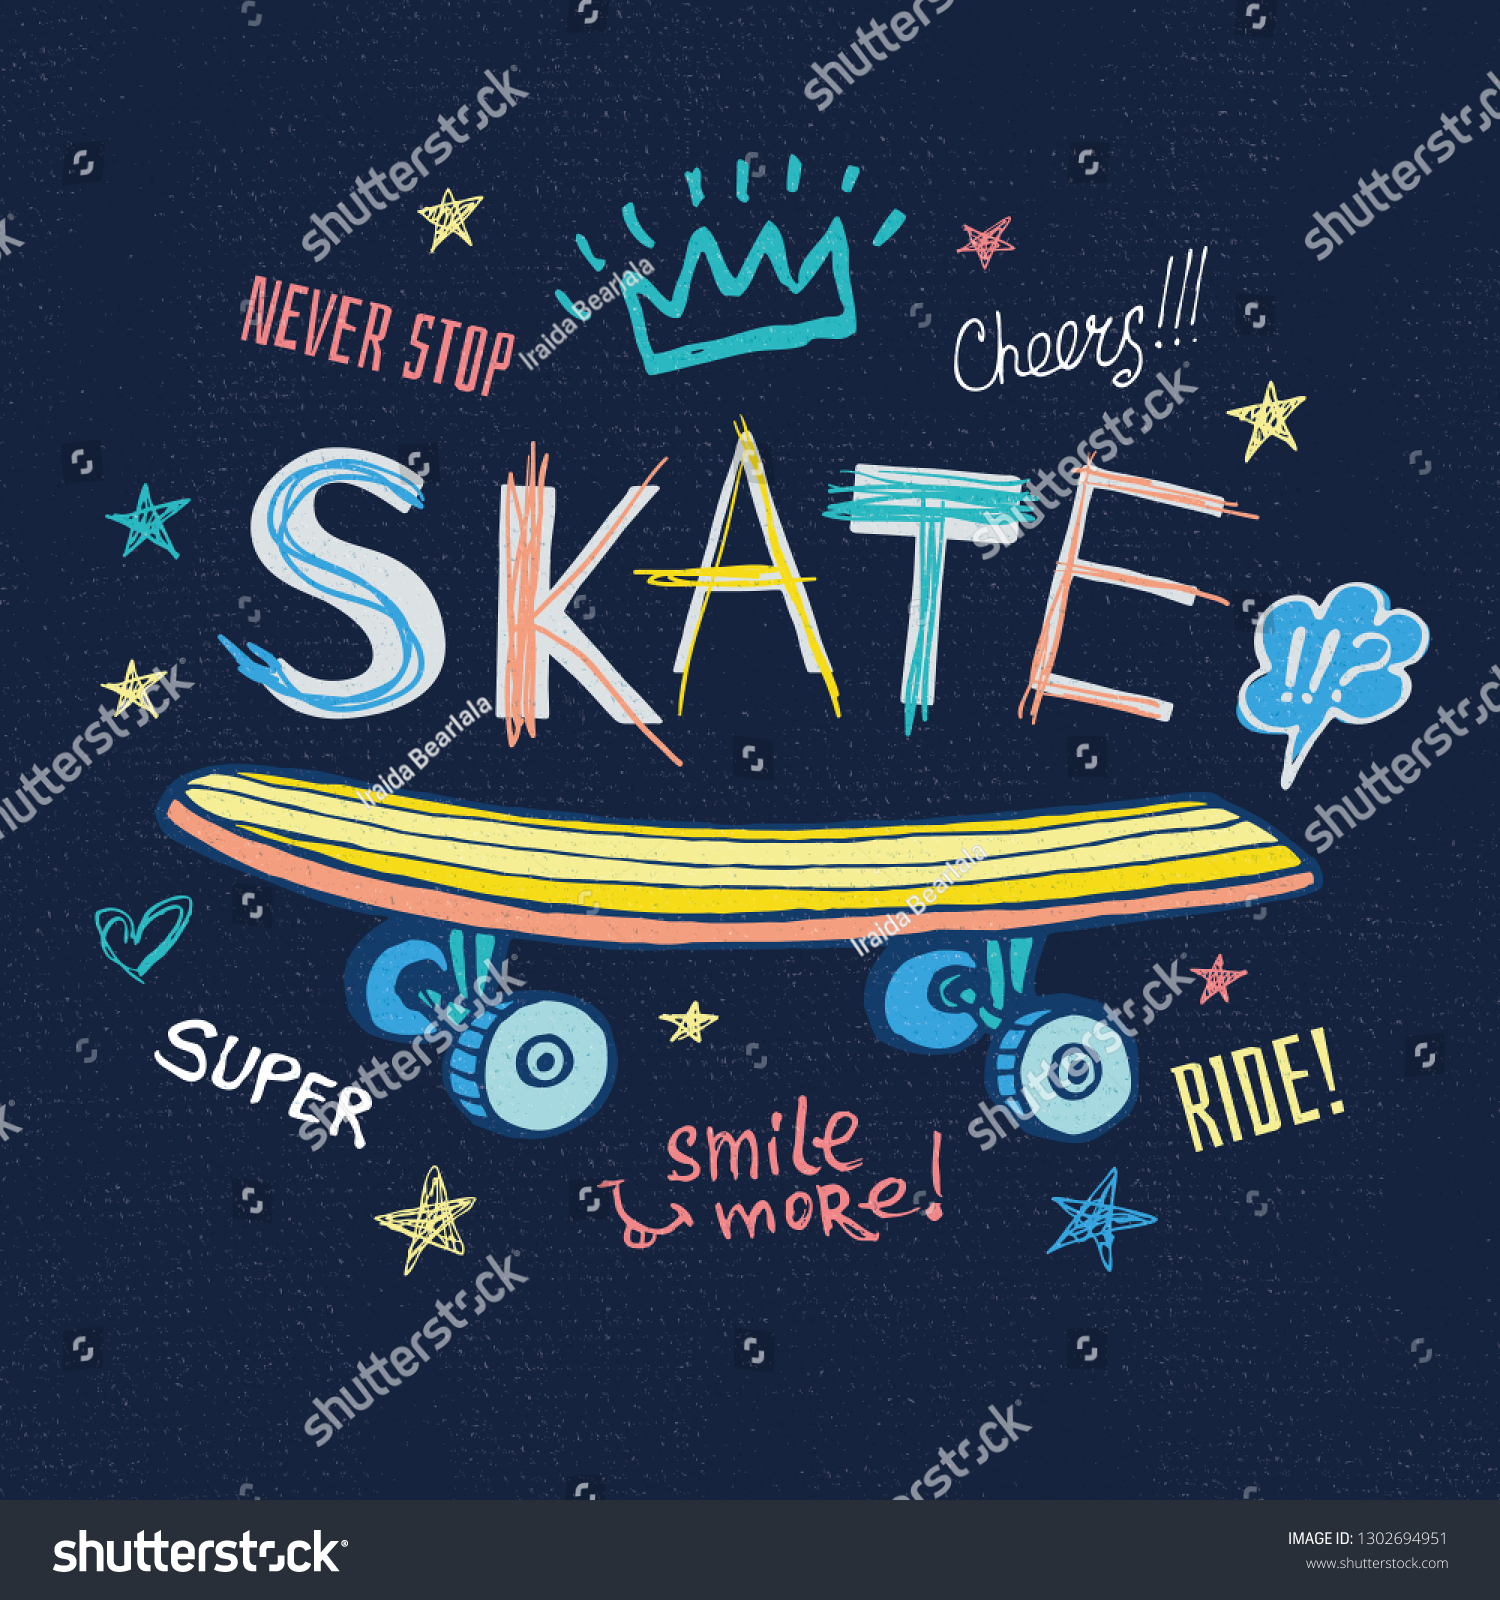 Roller skater boy Images, Stock Photos & Vectors | Shutterstock